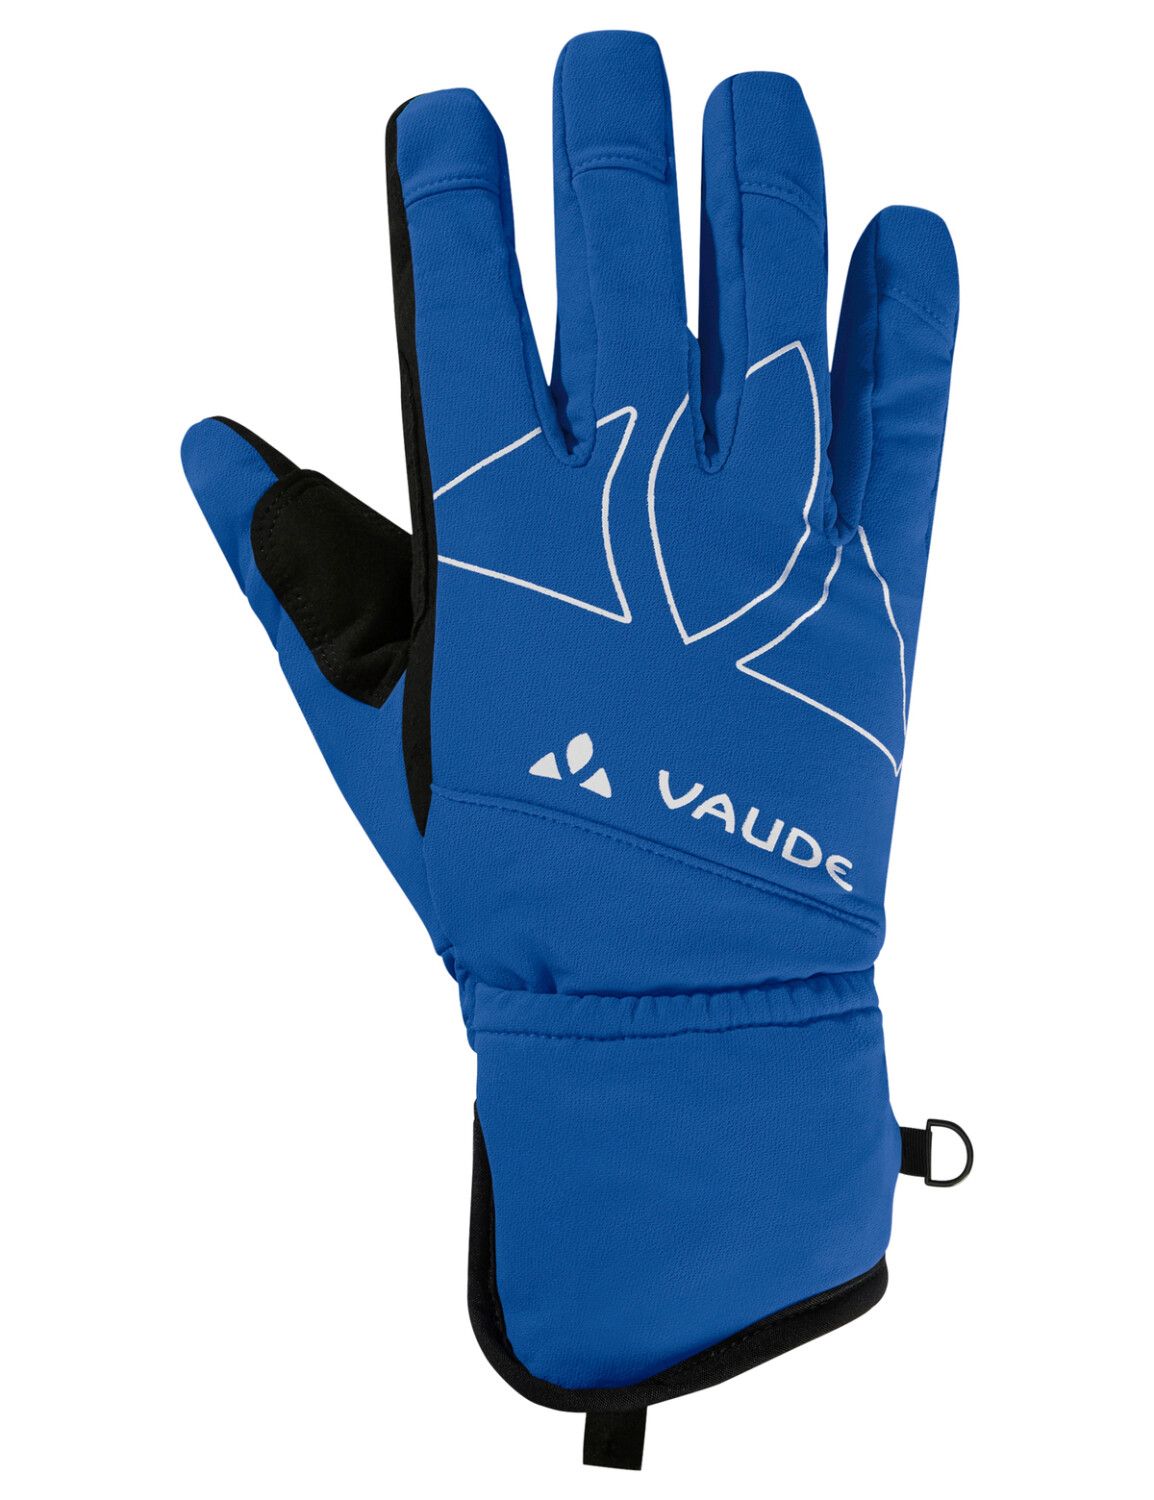 VAUDE La Varella Gloves (Bild 10)